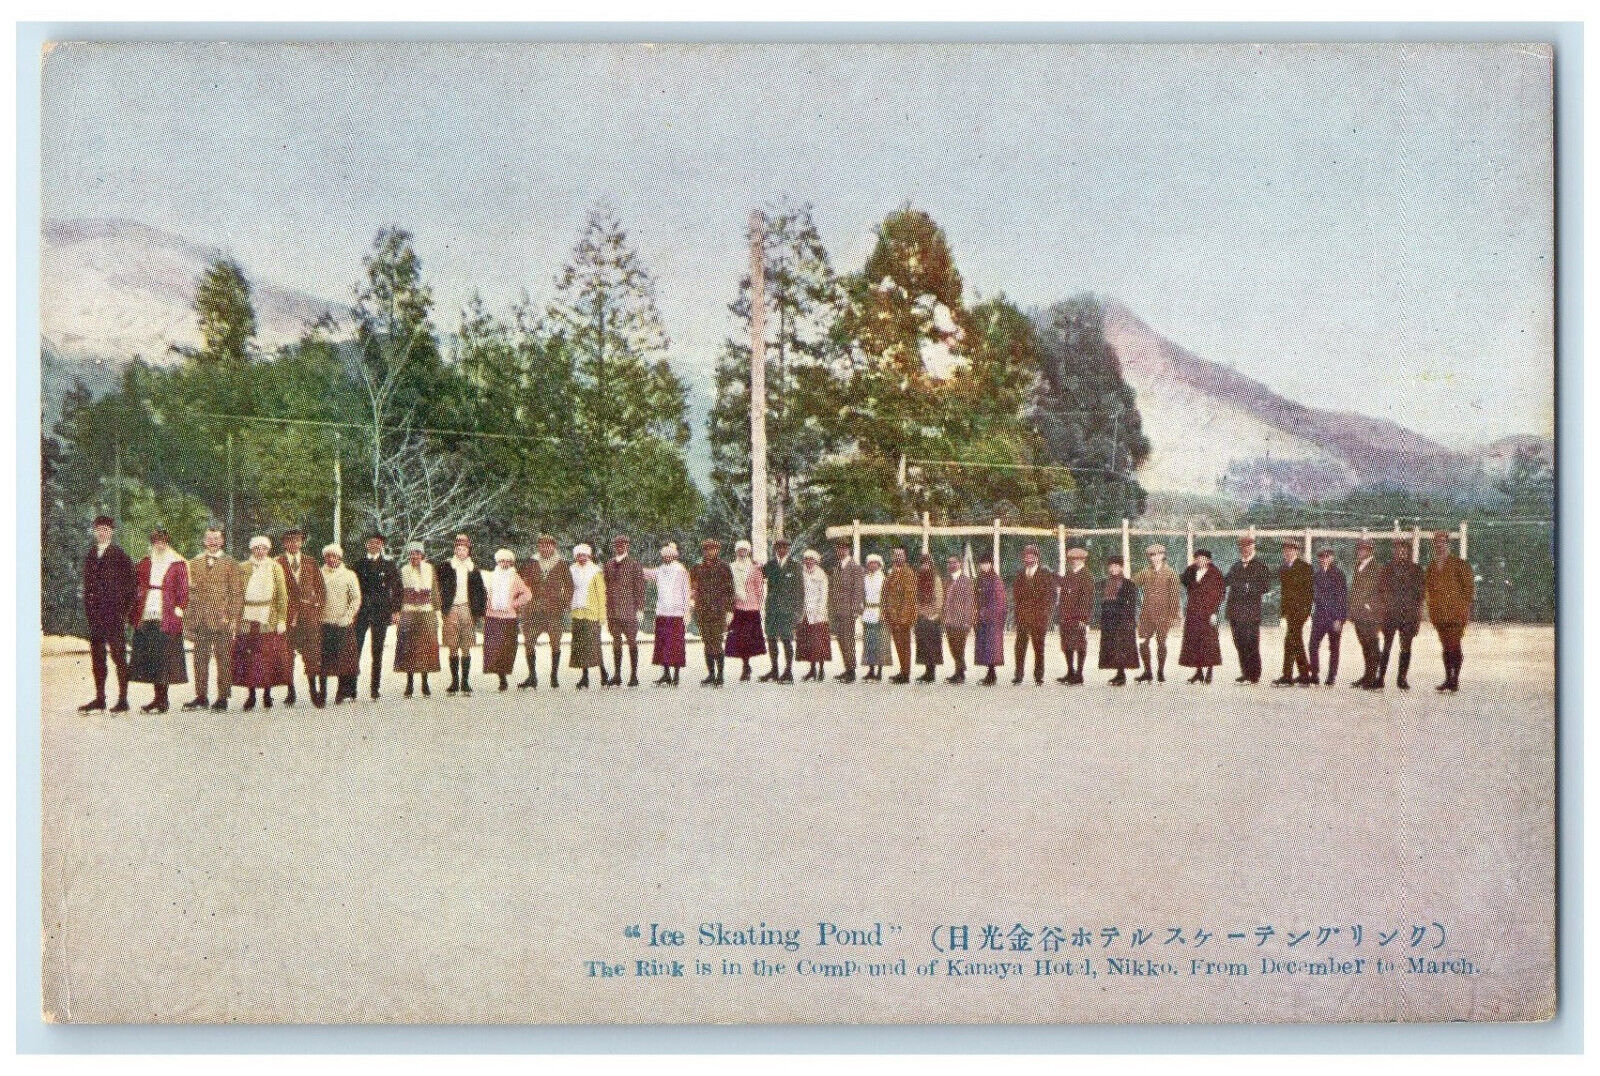 c1910 Ice Skating Pond Rink Is In Compound of Kanaya Hotel Nikko Japan Postcard